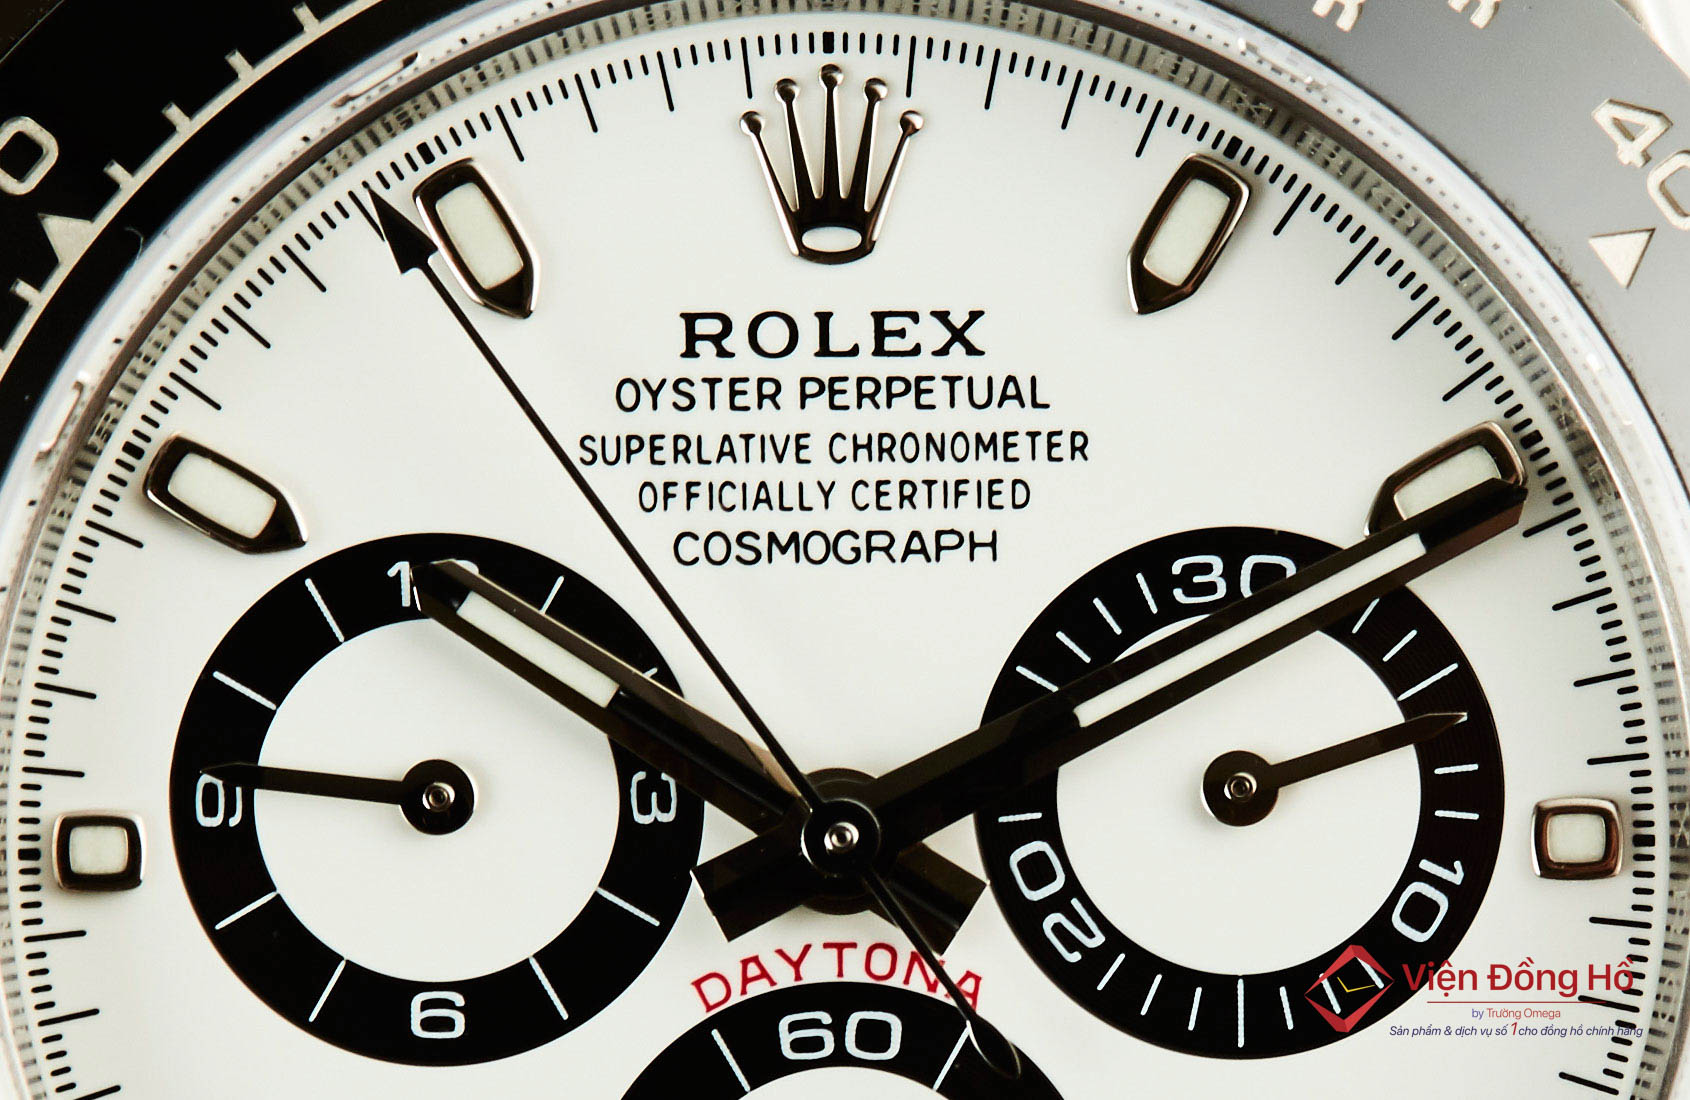 Chung nhan Superlative Chronometer danh gia cua Rolex 1